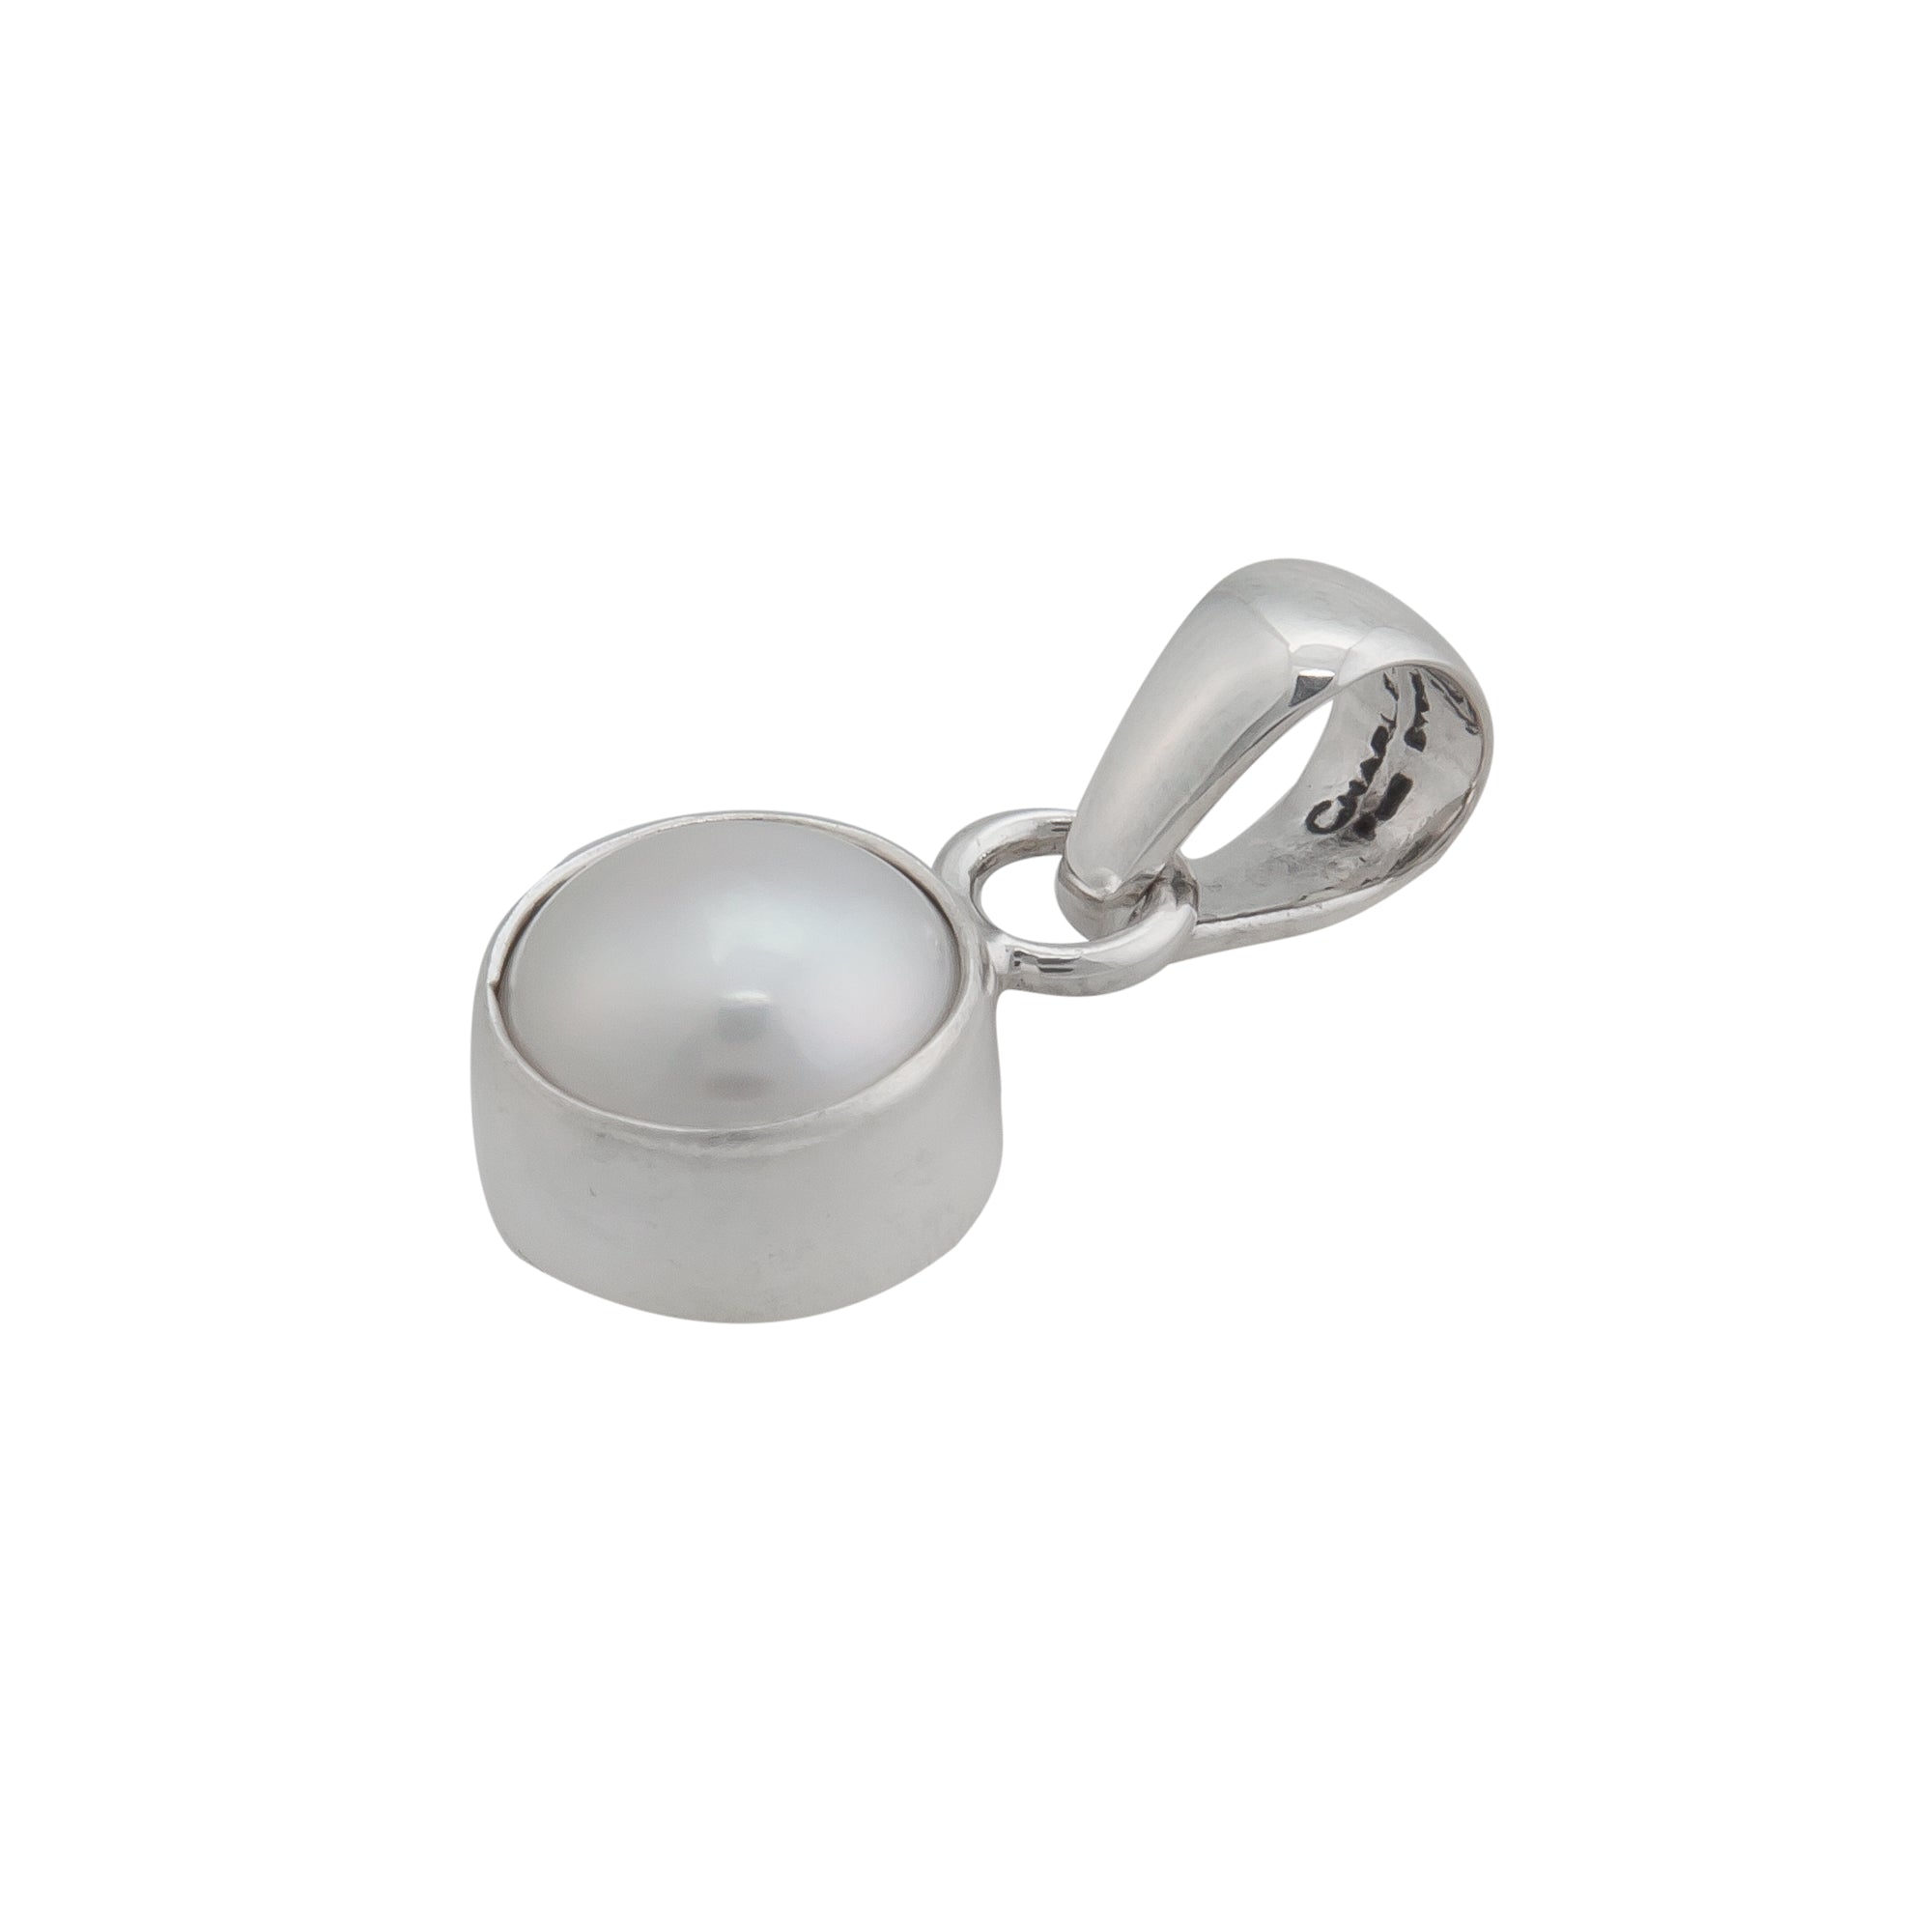 Sterling Silver Pearl Pendant | Charles Albert Jewelry